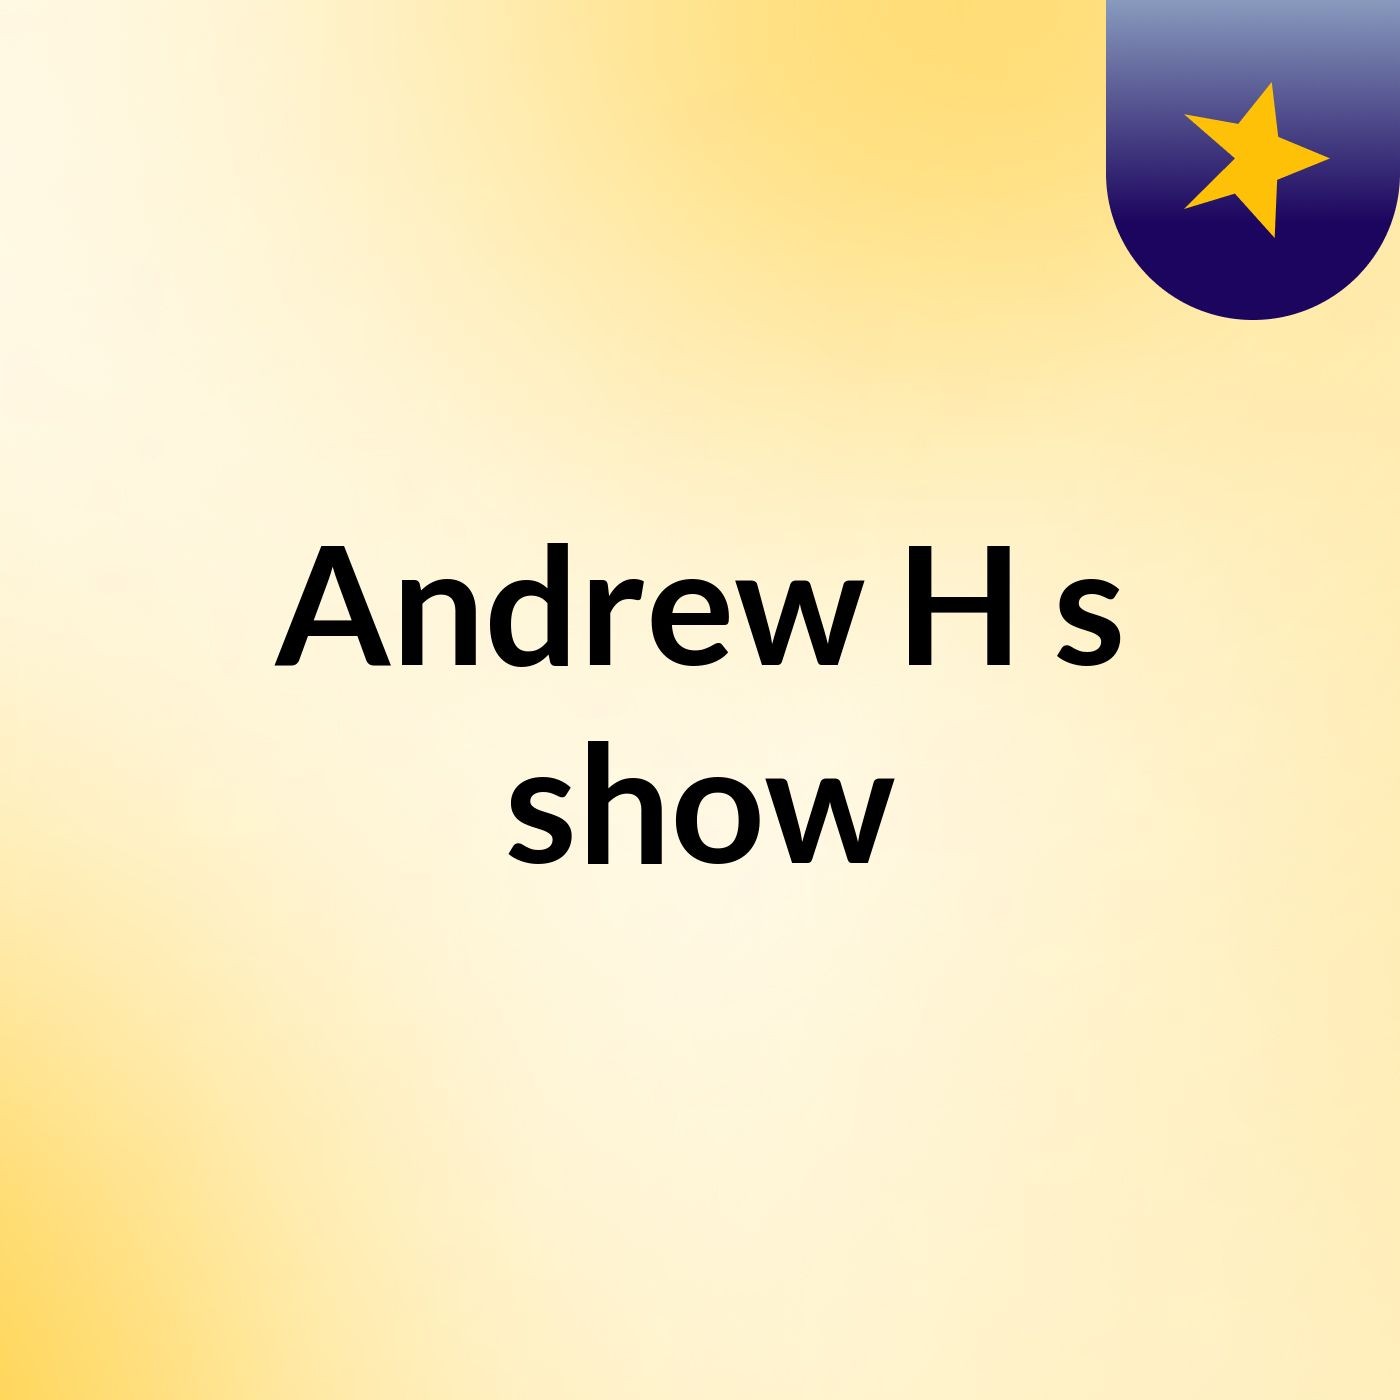 Andrew H's show